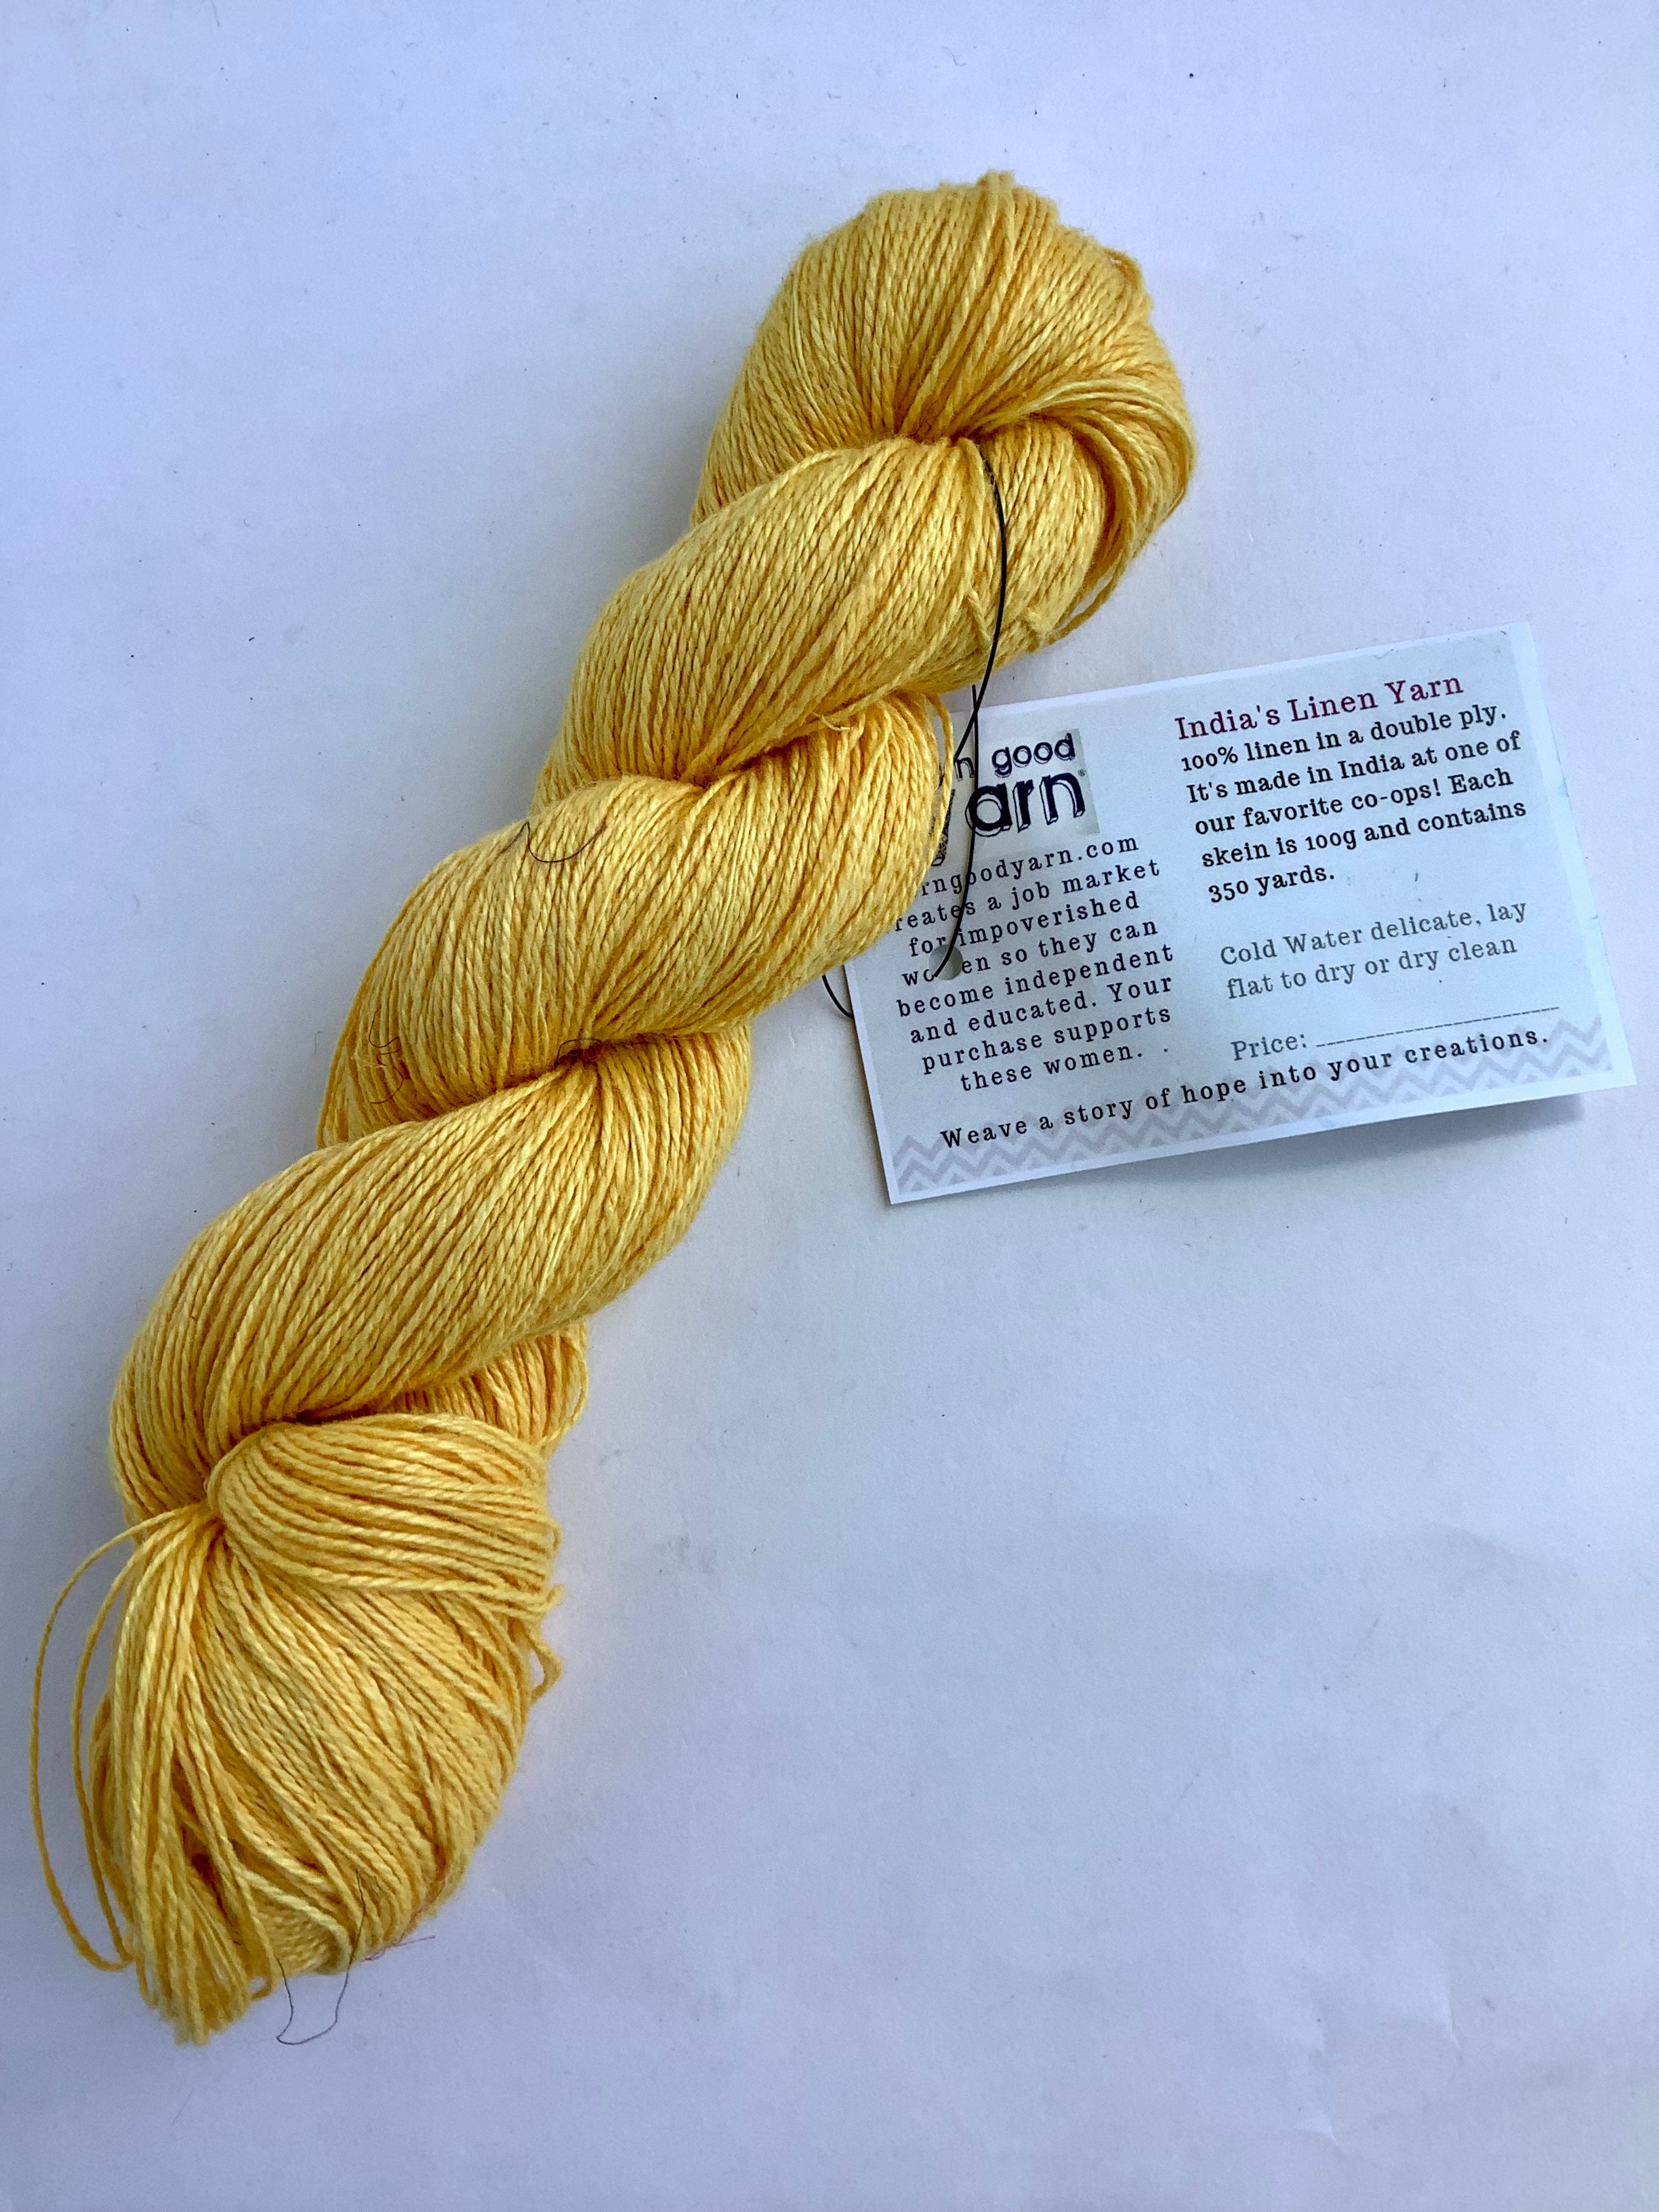 DGY India’s Linen Yarn Color: Sunflower